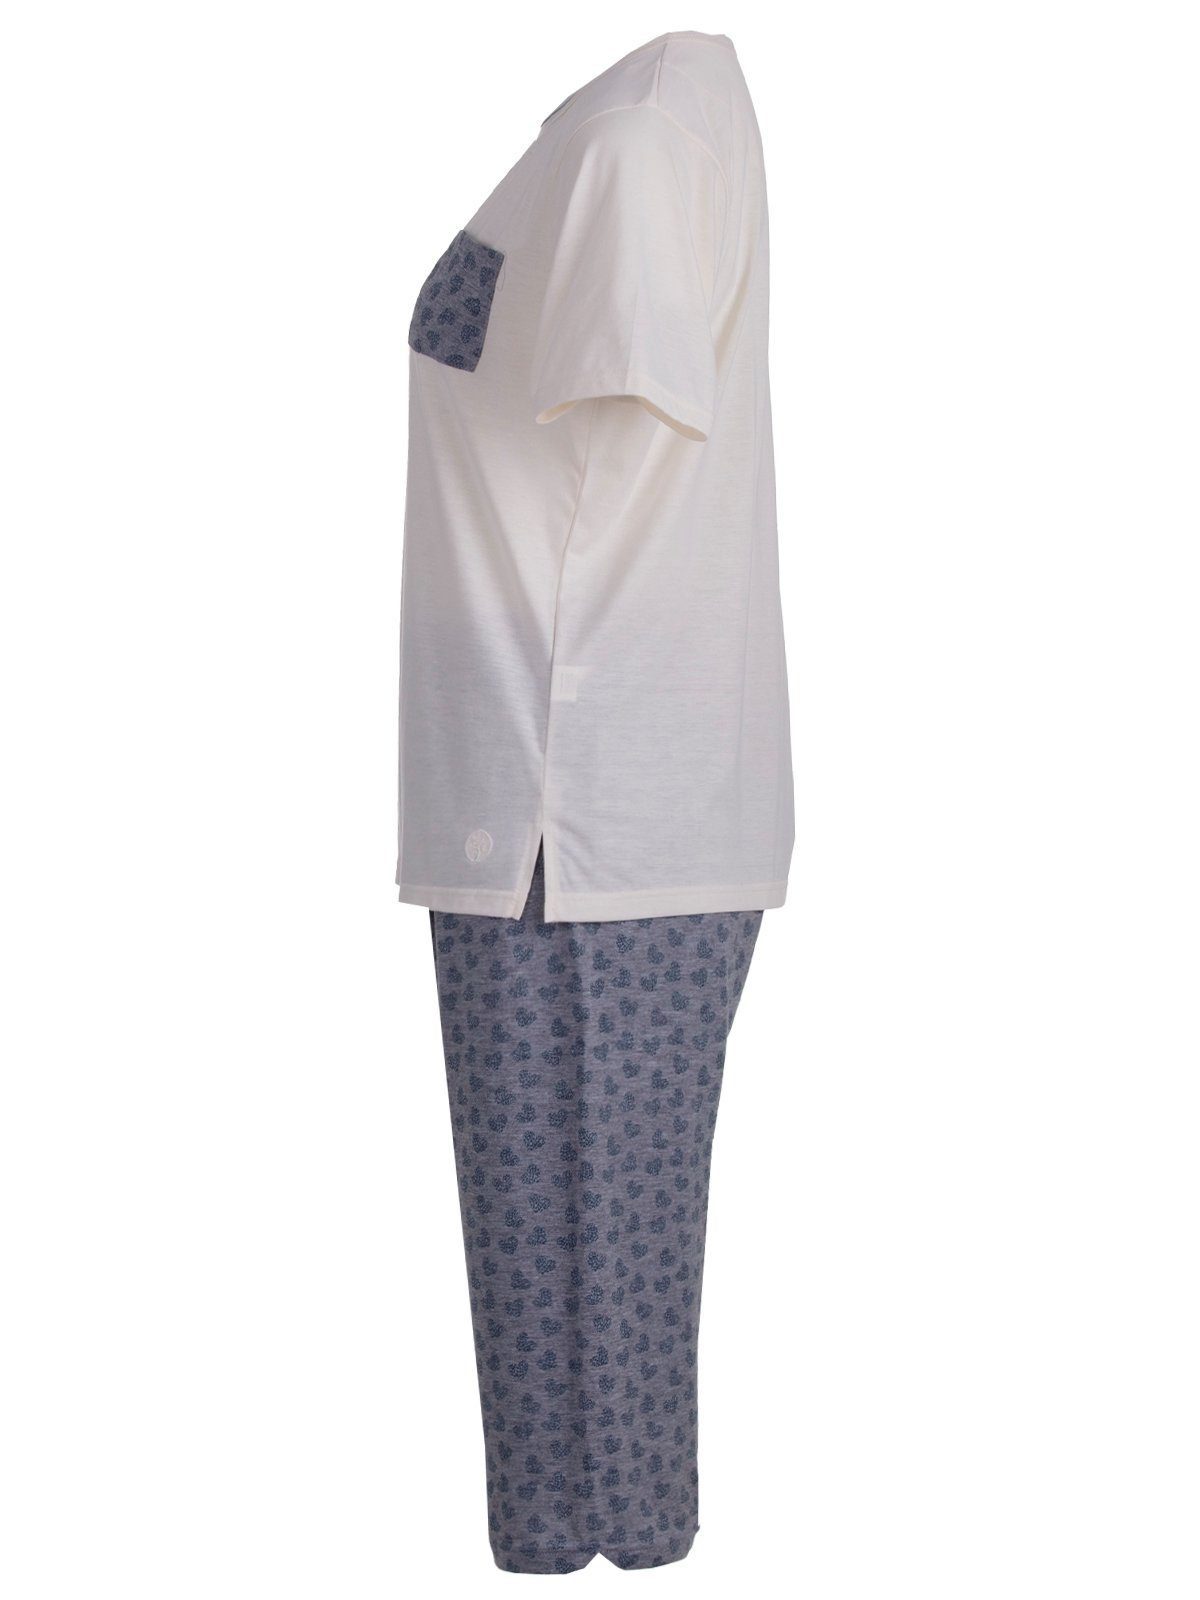 zeitlos Capri- Schlafanzug Set Pyjama off-white Herzen